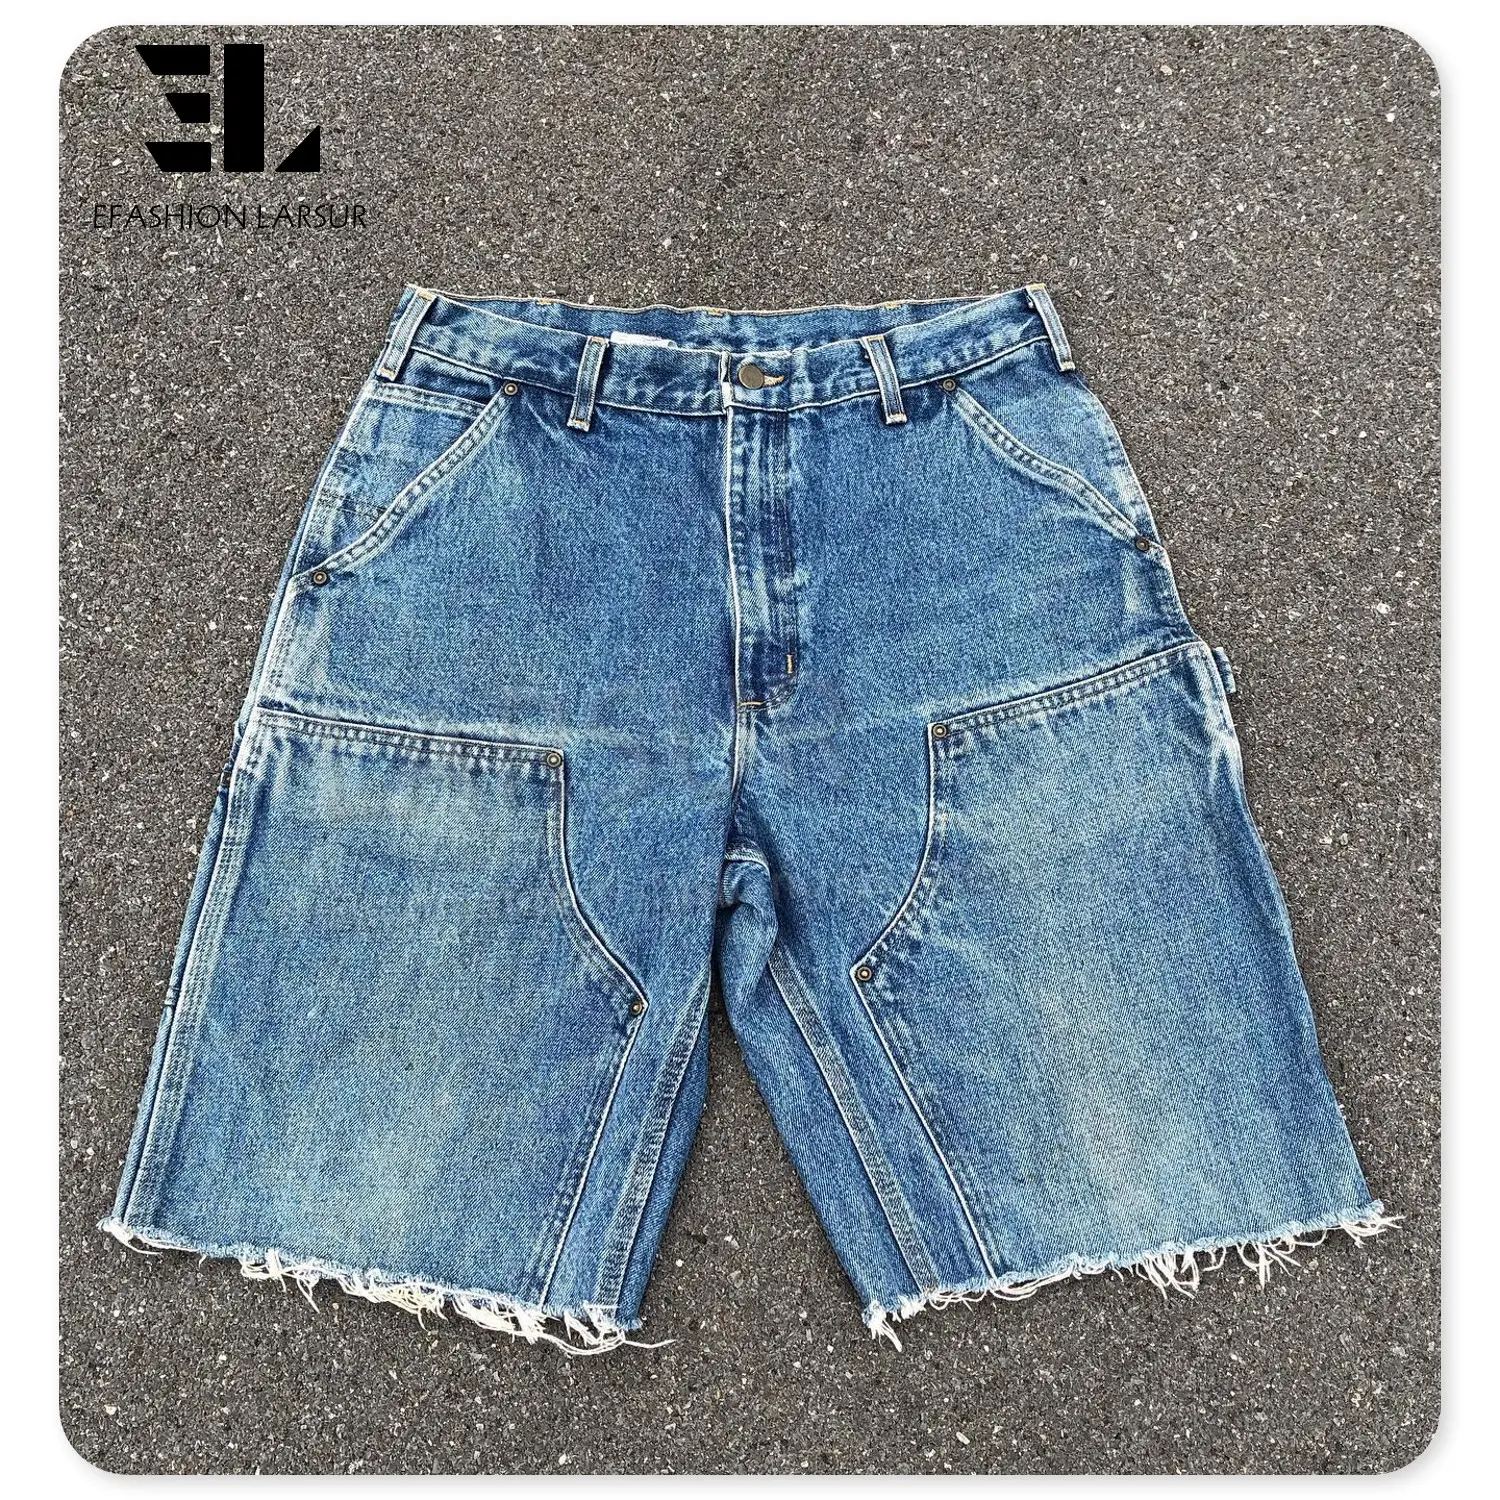 LARSUR Custom factory soccorso wash baggy double knee twill tela carpenter cargo shorts jeans jorts da lavoro pantalone uomo